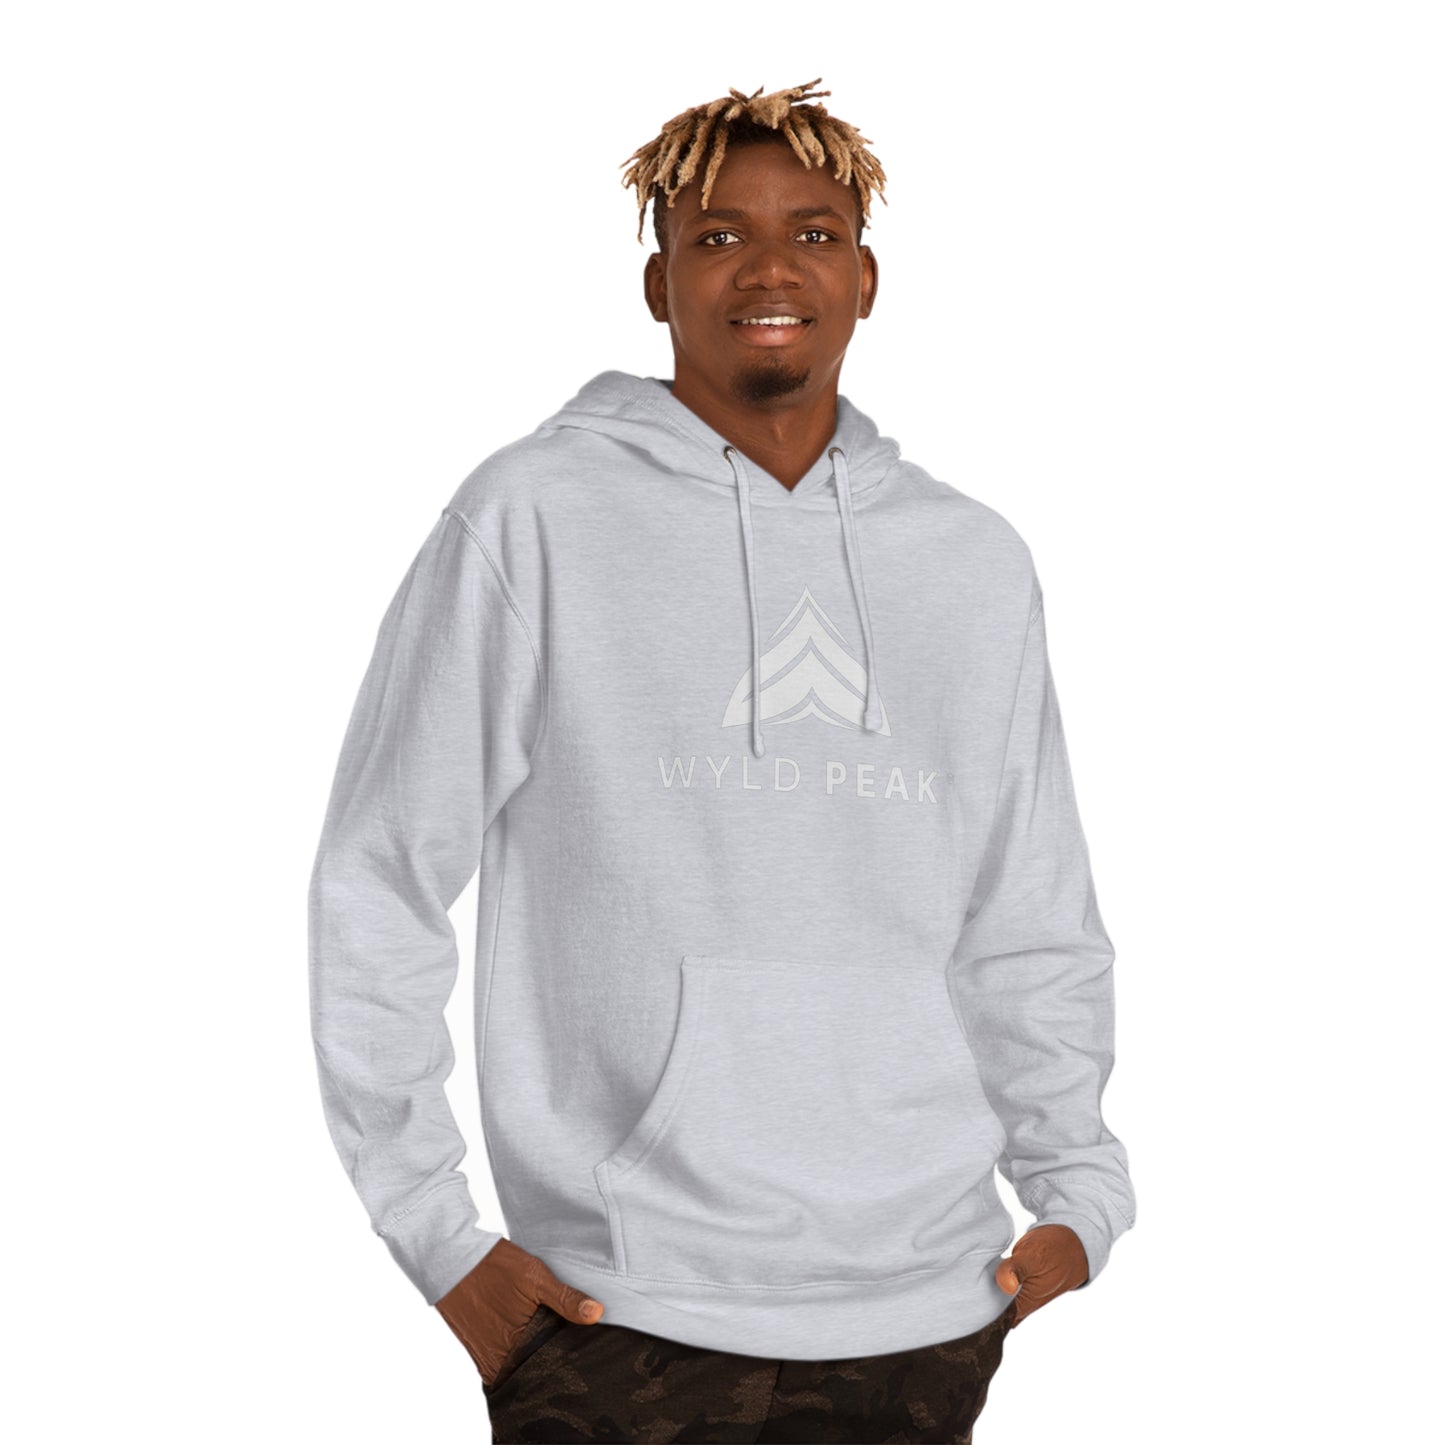 Premium quality classic hooded sweatshirt for men and women